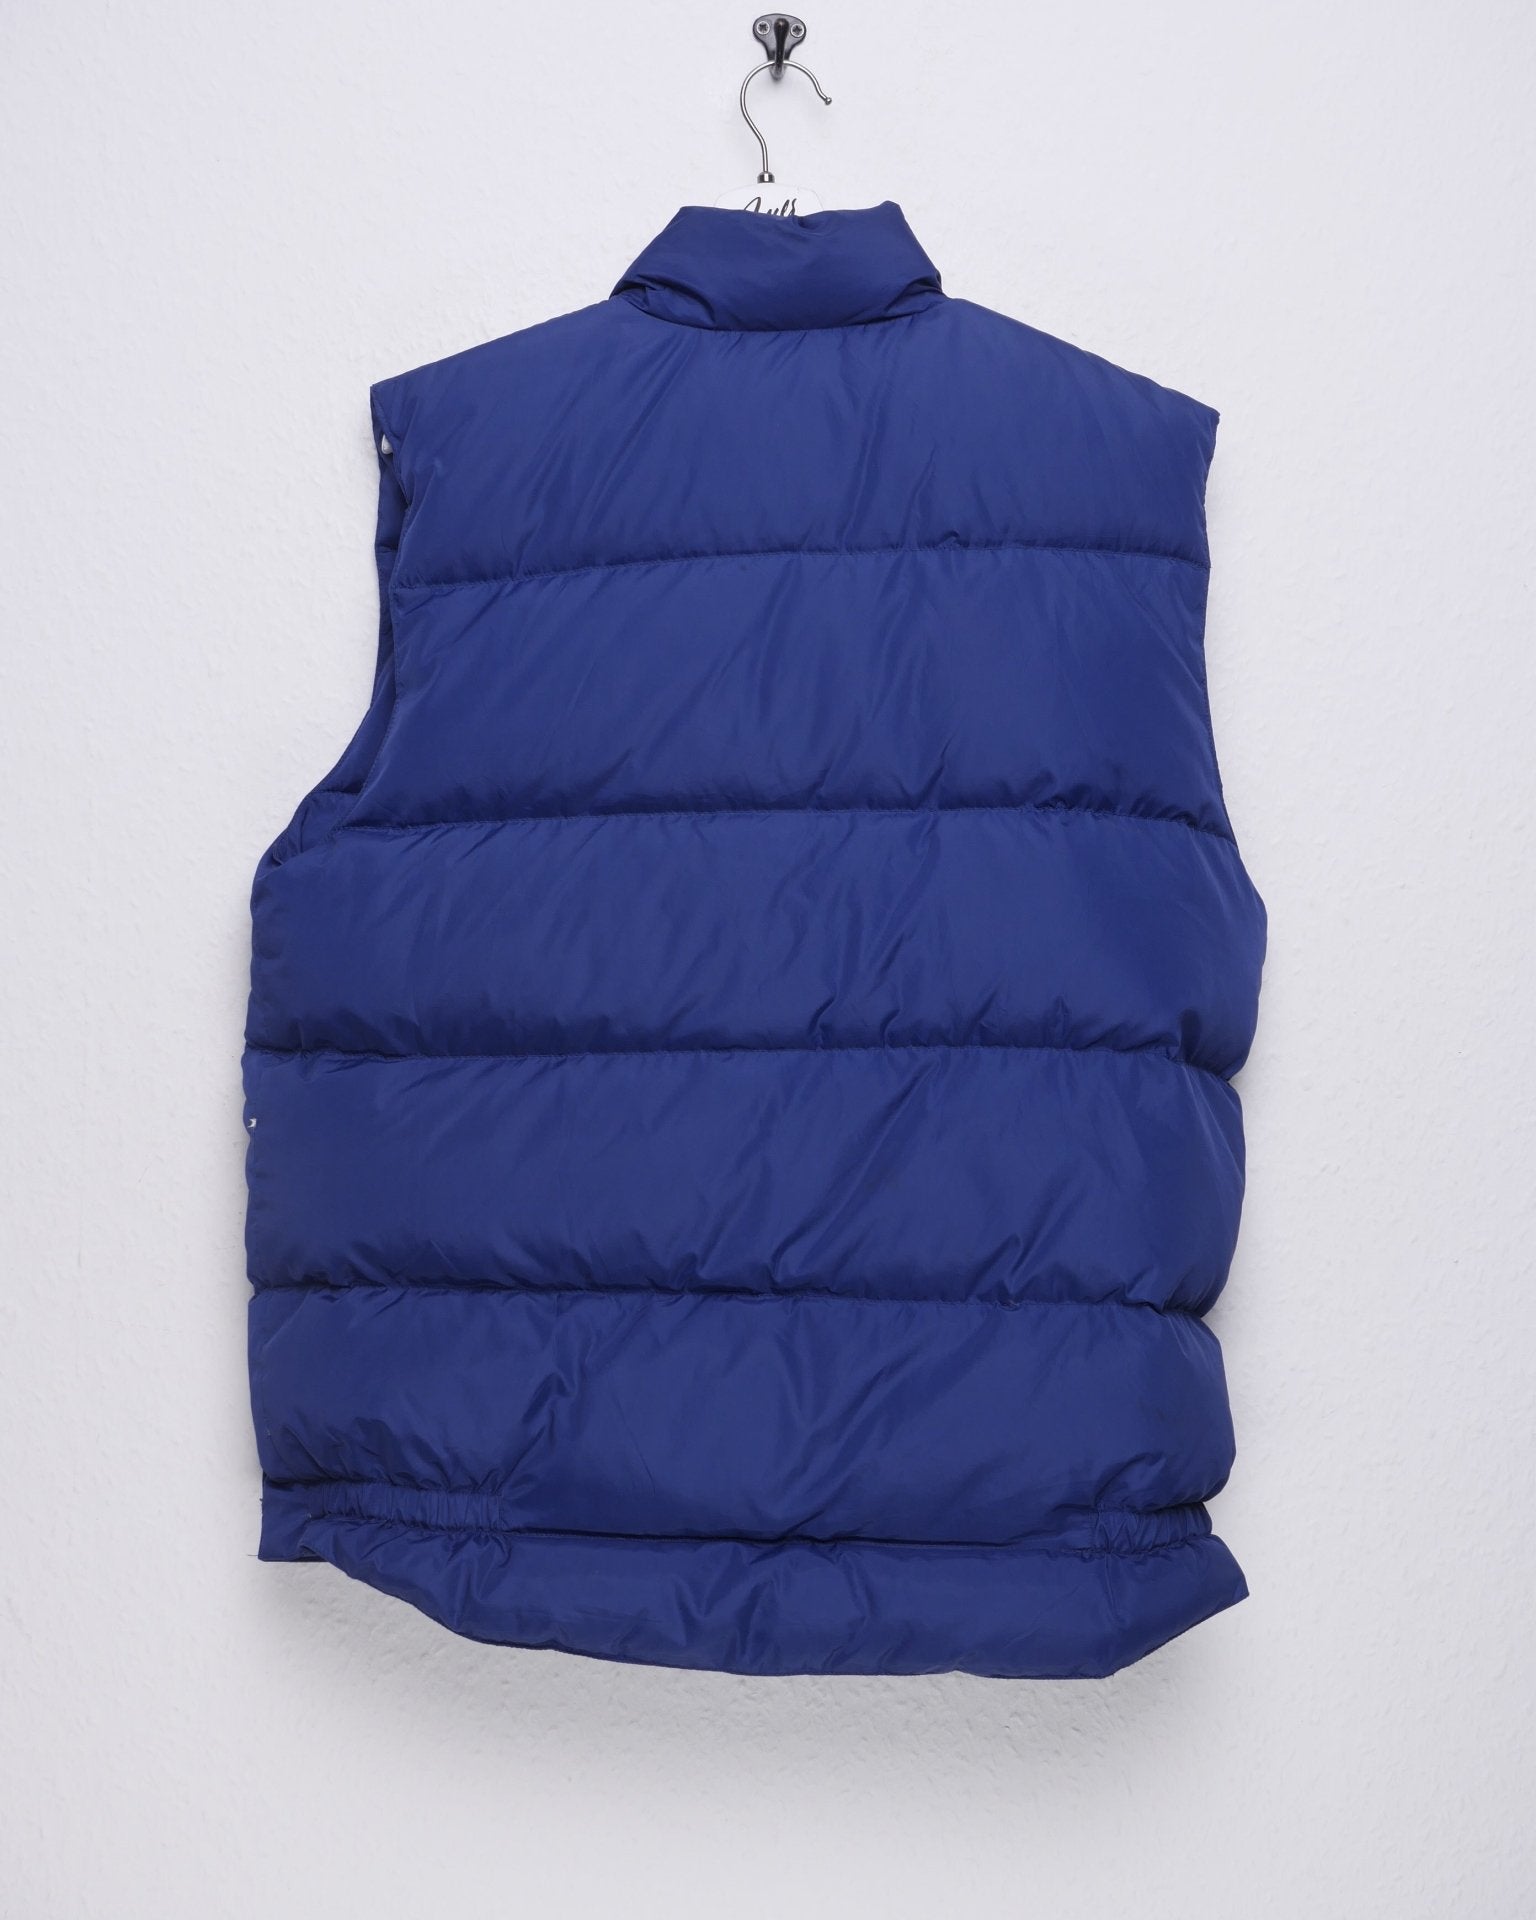 Vintage blue puffy Vest Jacke - Peeces